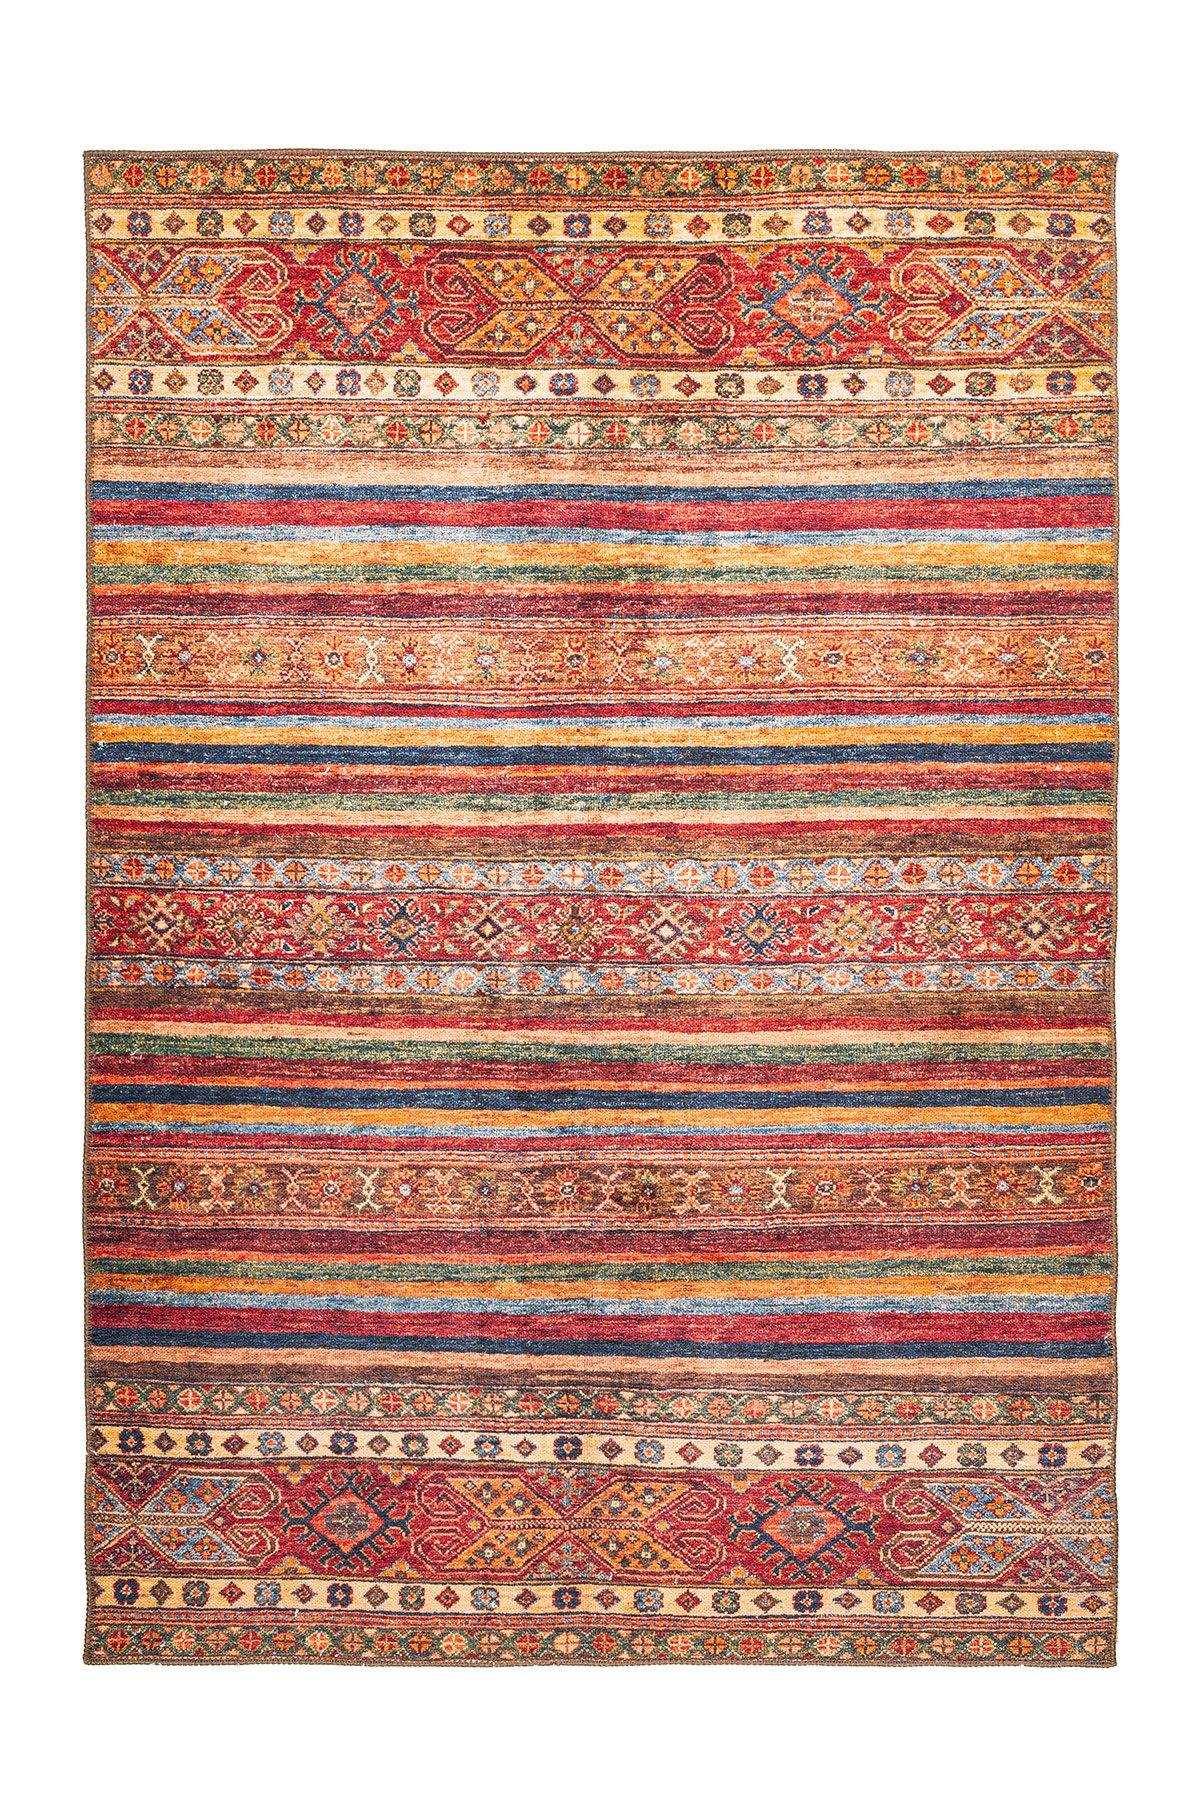 Teppich Faye 725 Multi / Rot, Oriental-Look Etno - carpetz